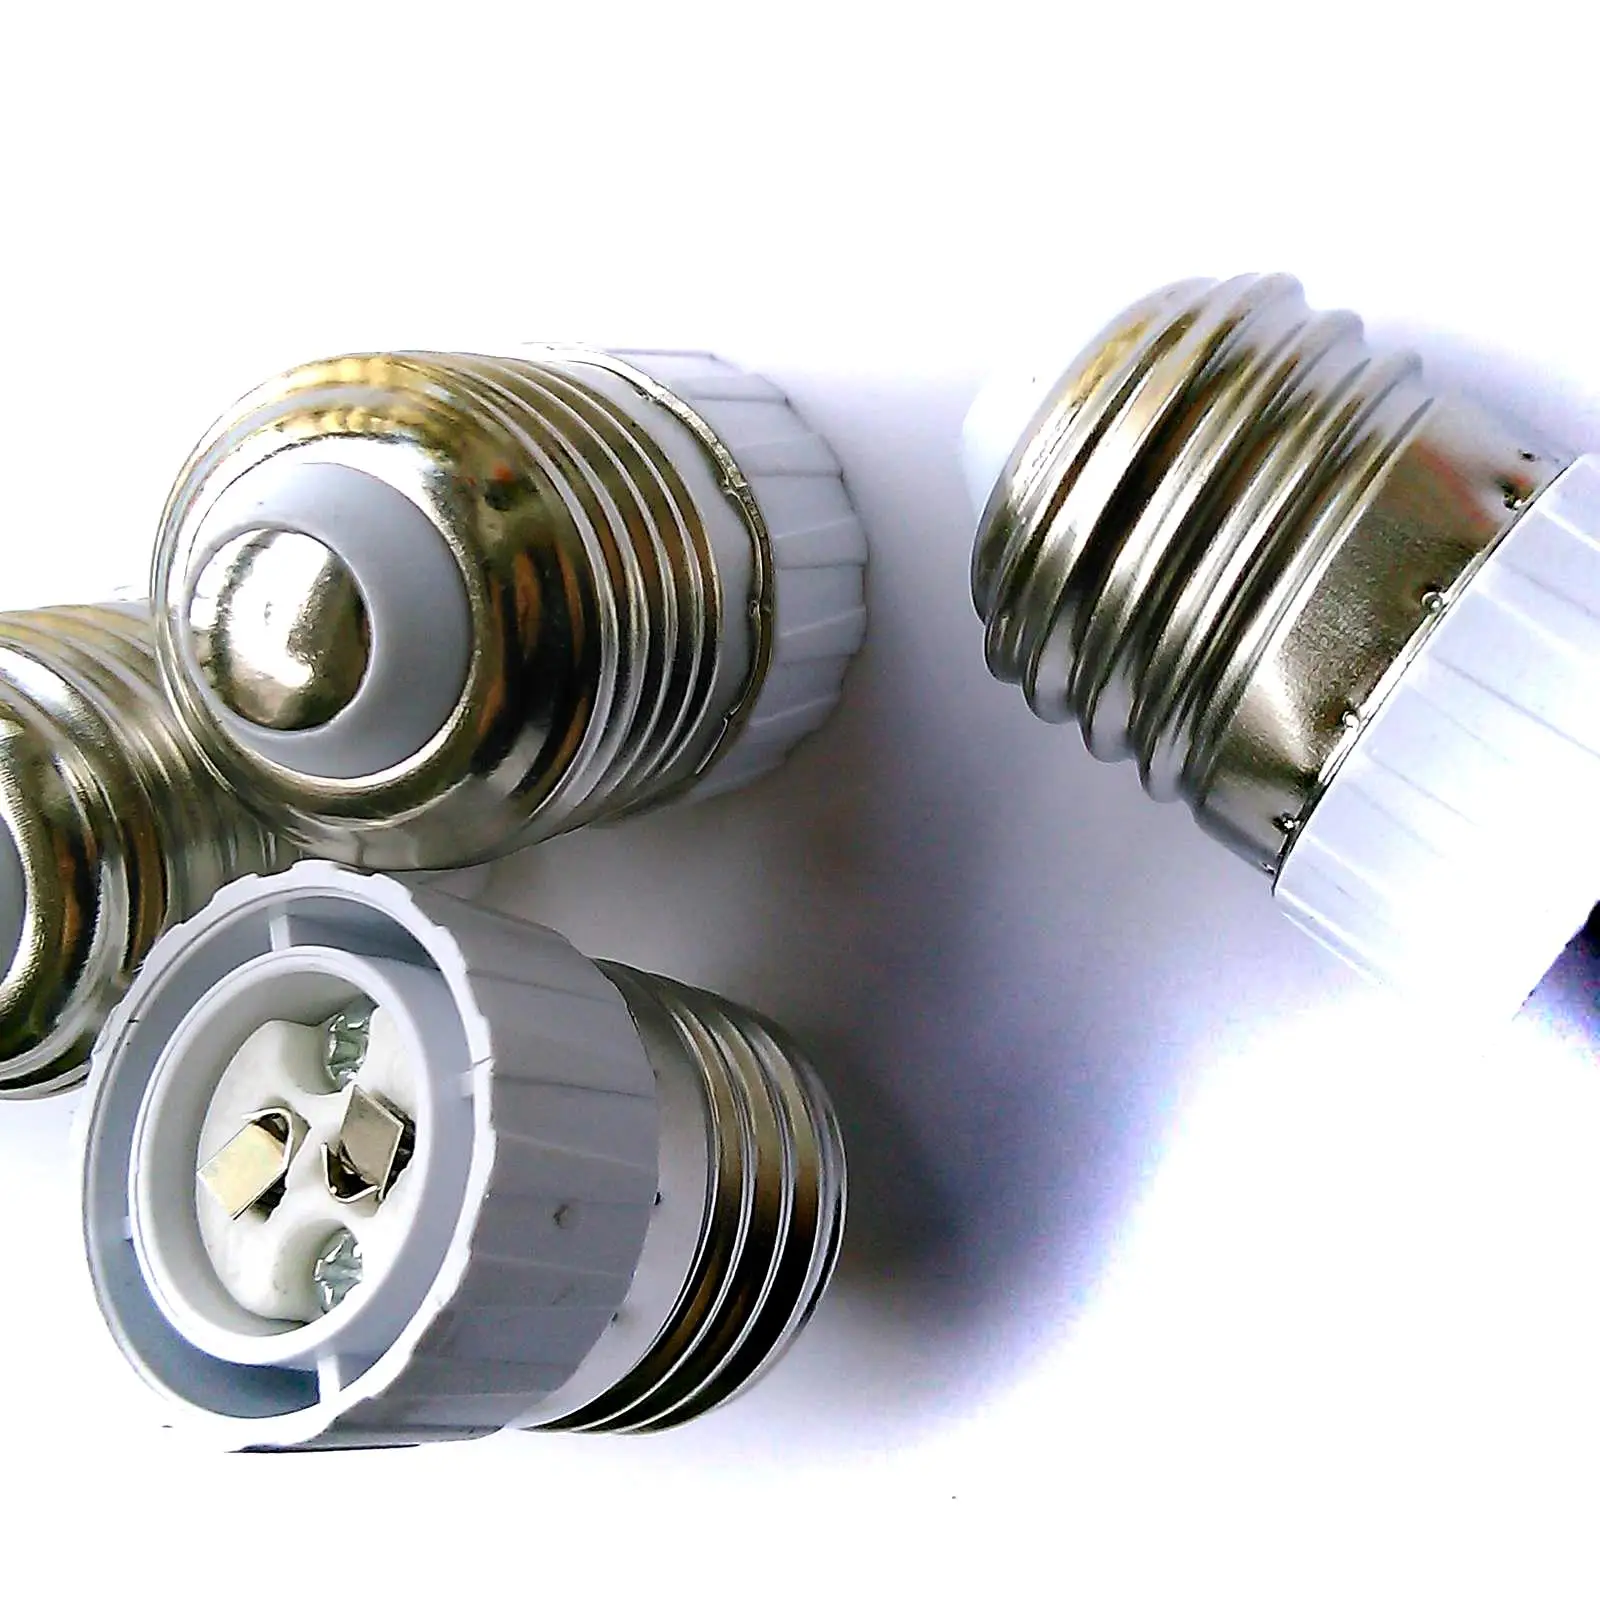 10 x E27 Male to GU10 Female Socket Base LED Halogen CFL Light Bulb Lamp Adapter 